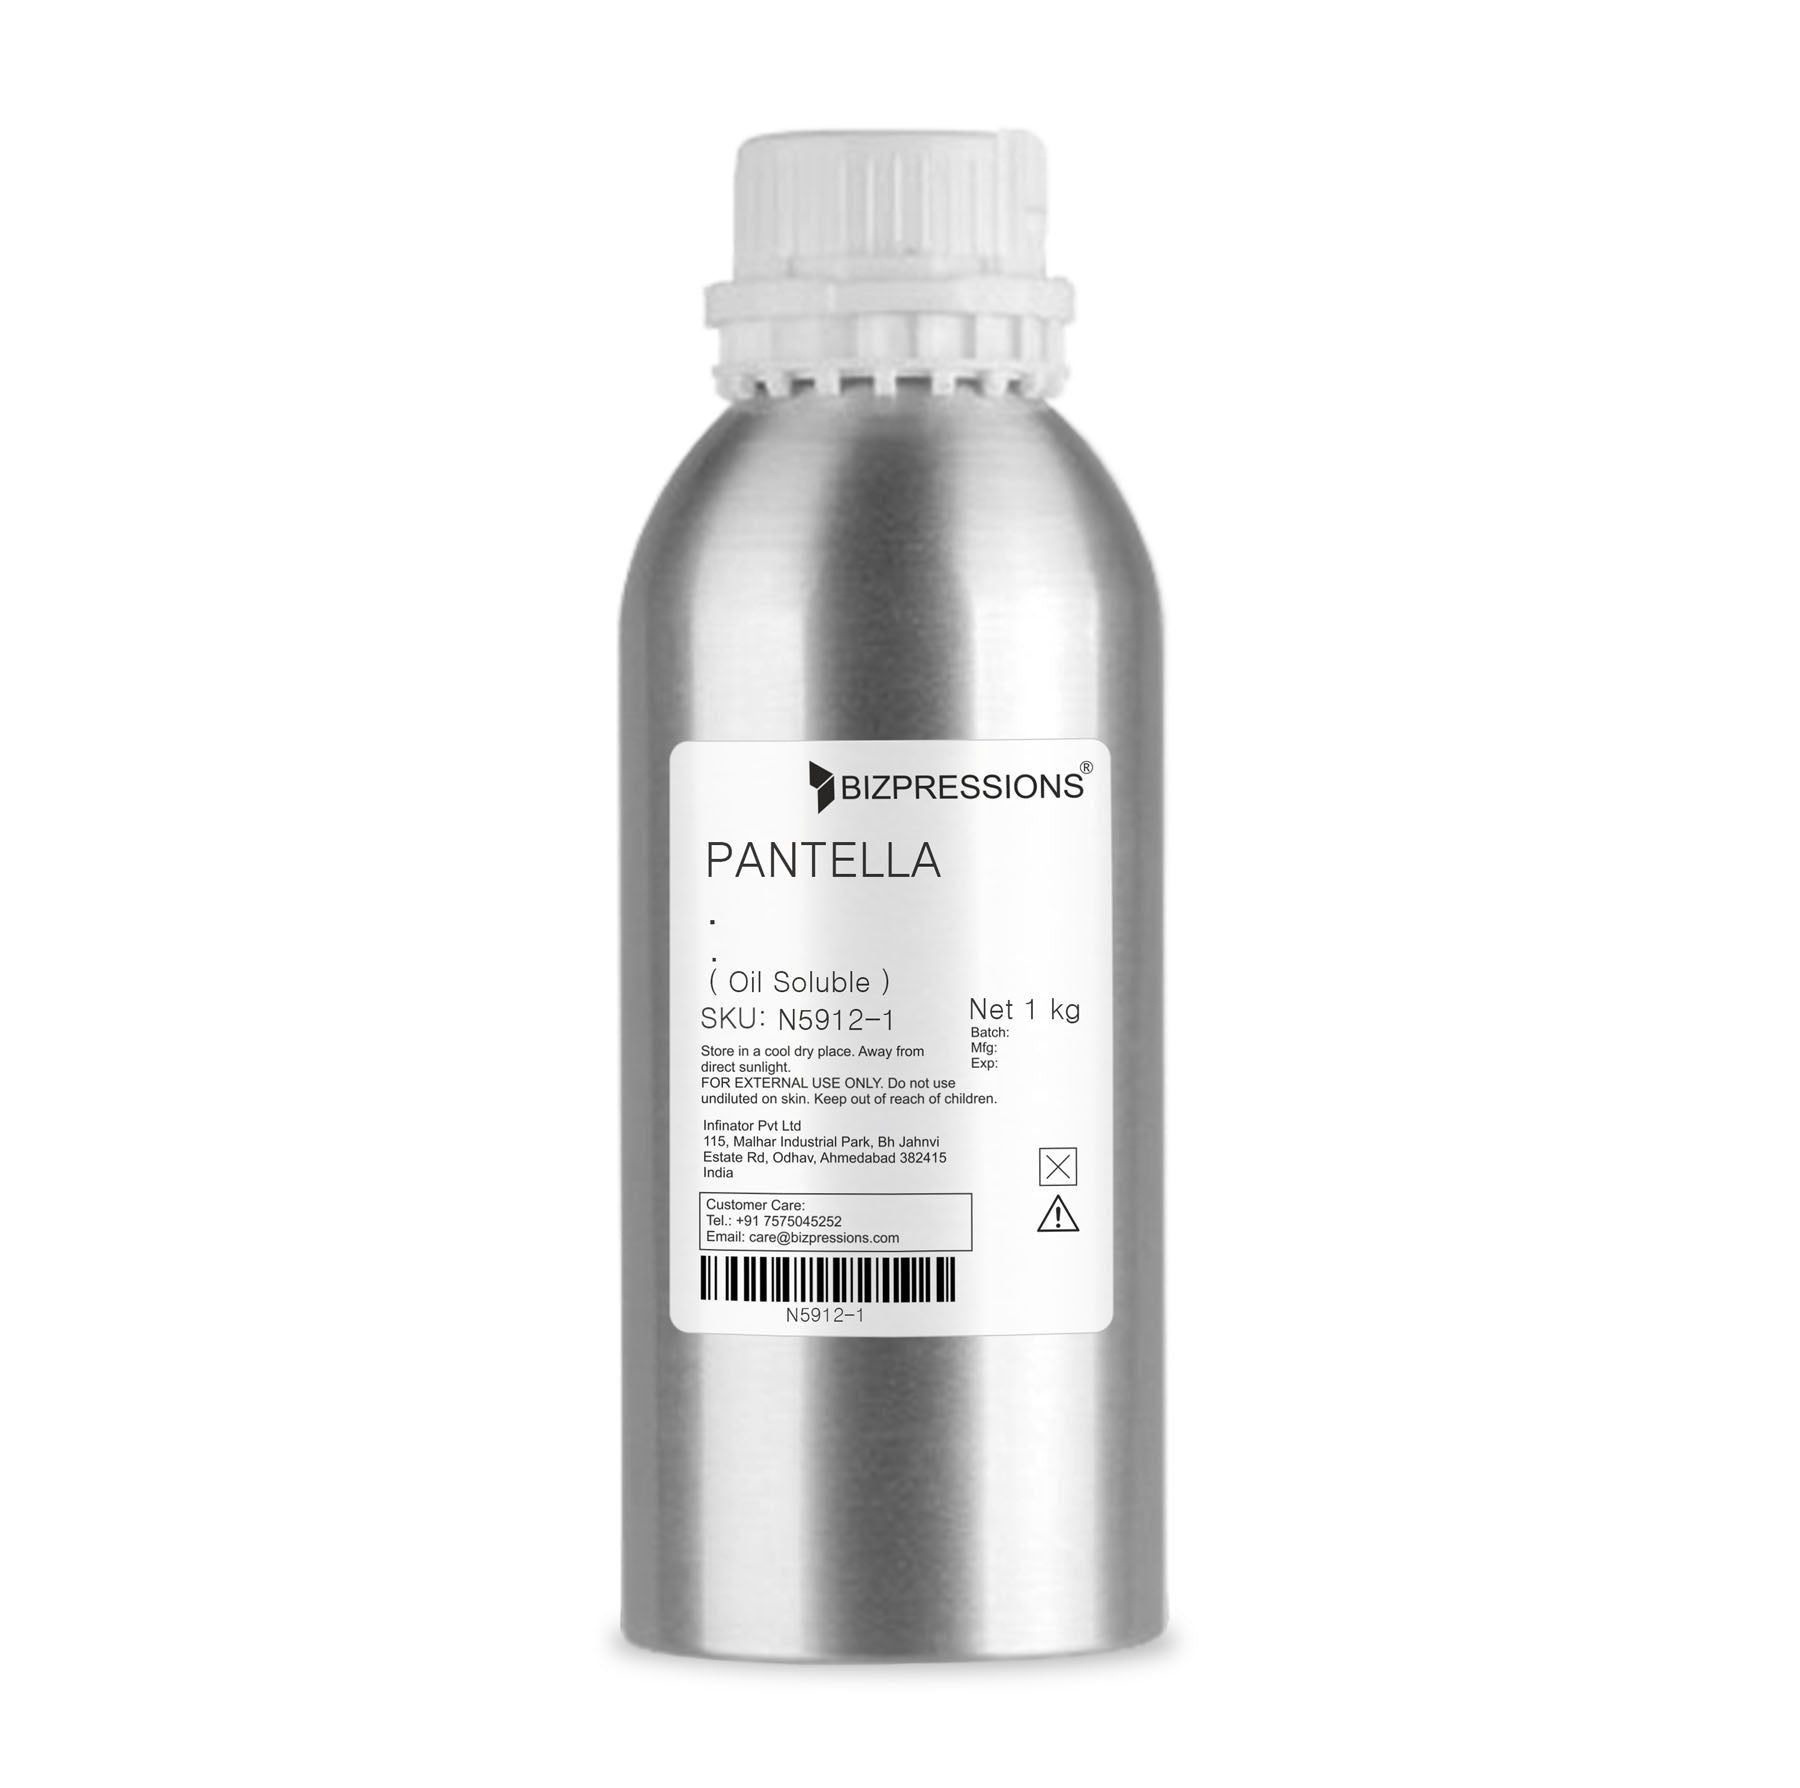 PANTELLA - Fragrance ( Oil Soluble ) - 1 kg